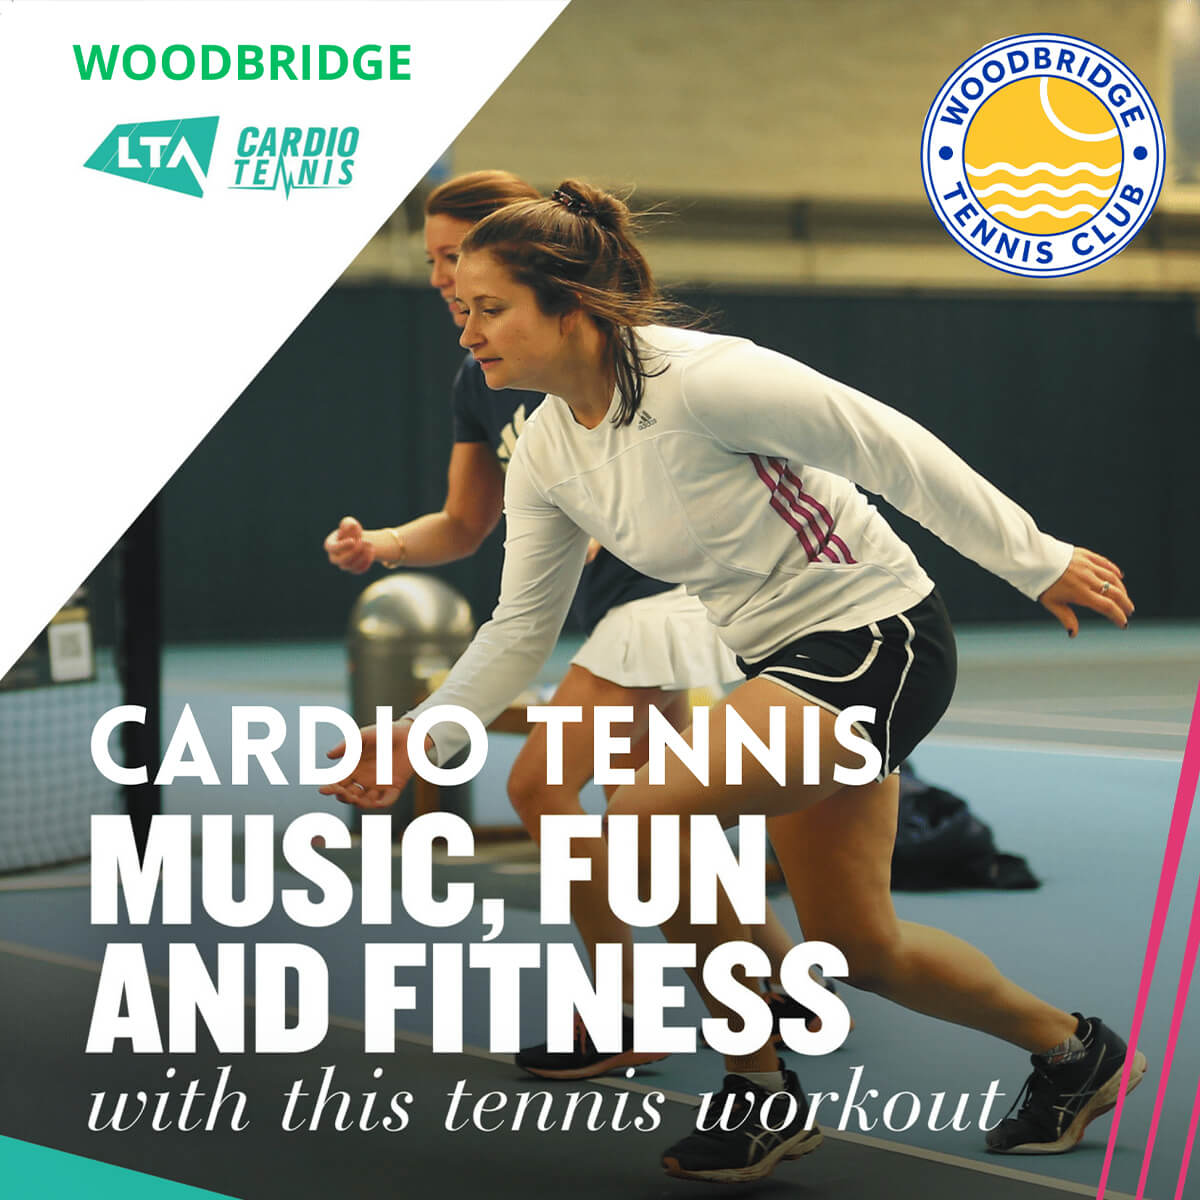 LTA Woodbridge Cardio Tennis